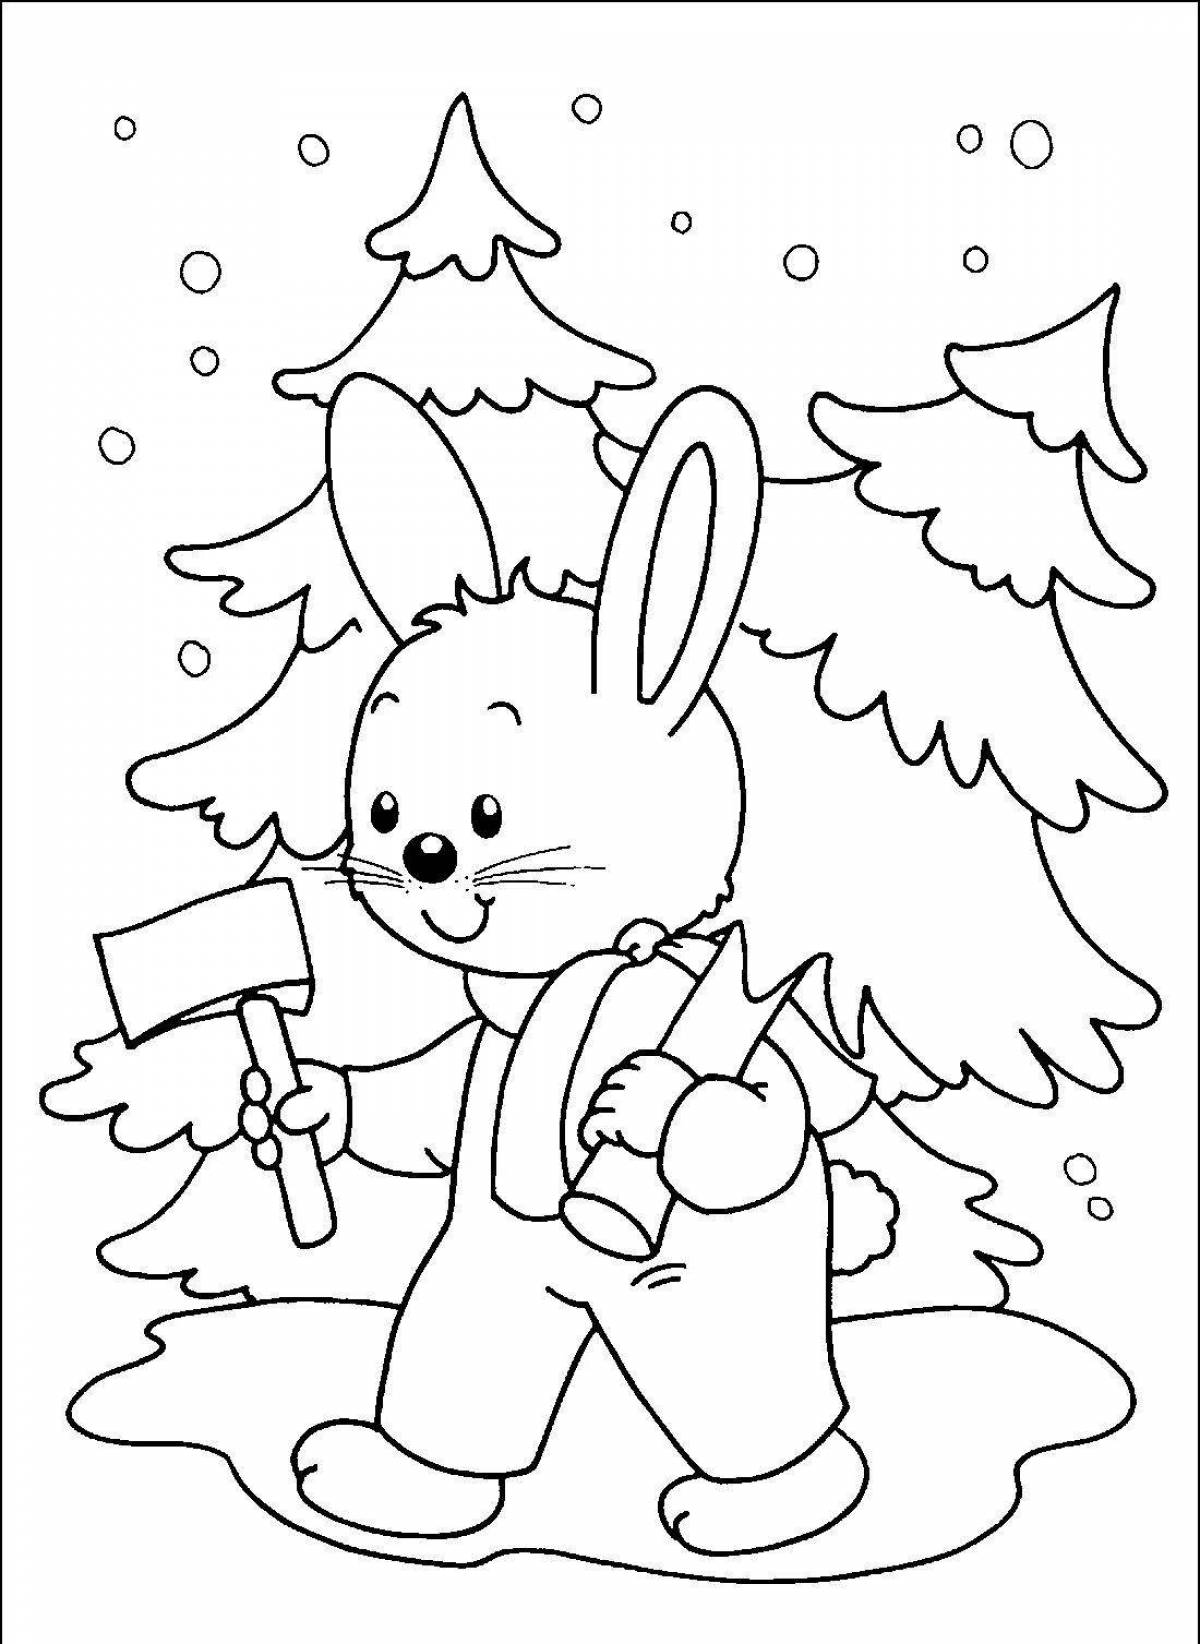 Joyful coloring of a rabbit in winter